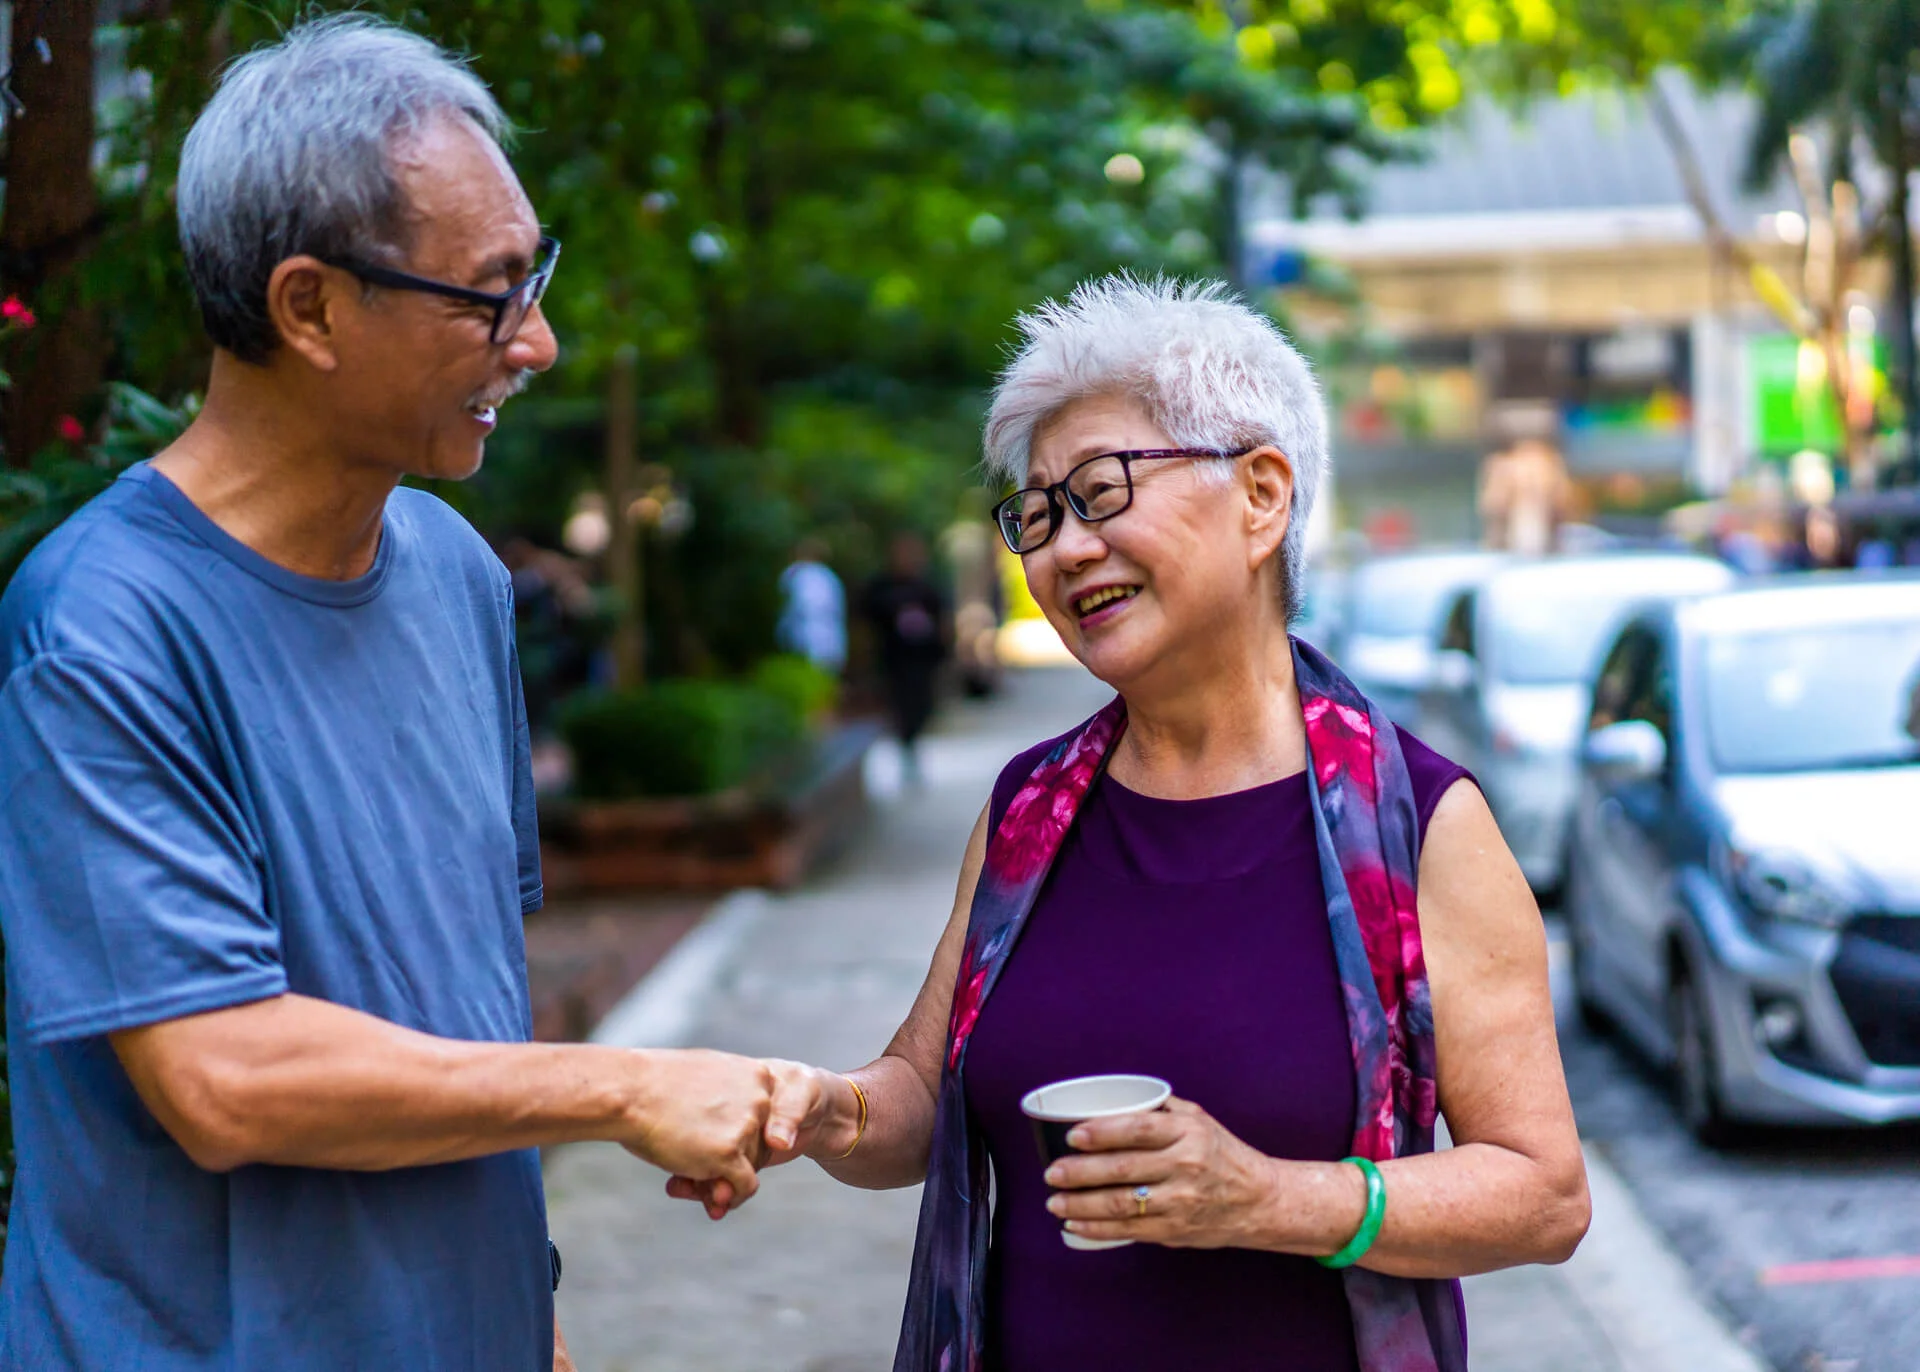 two elderly people meeting on the street